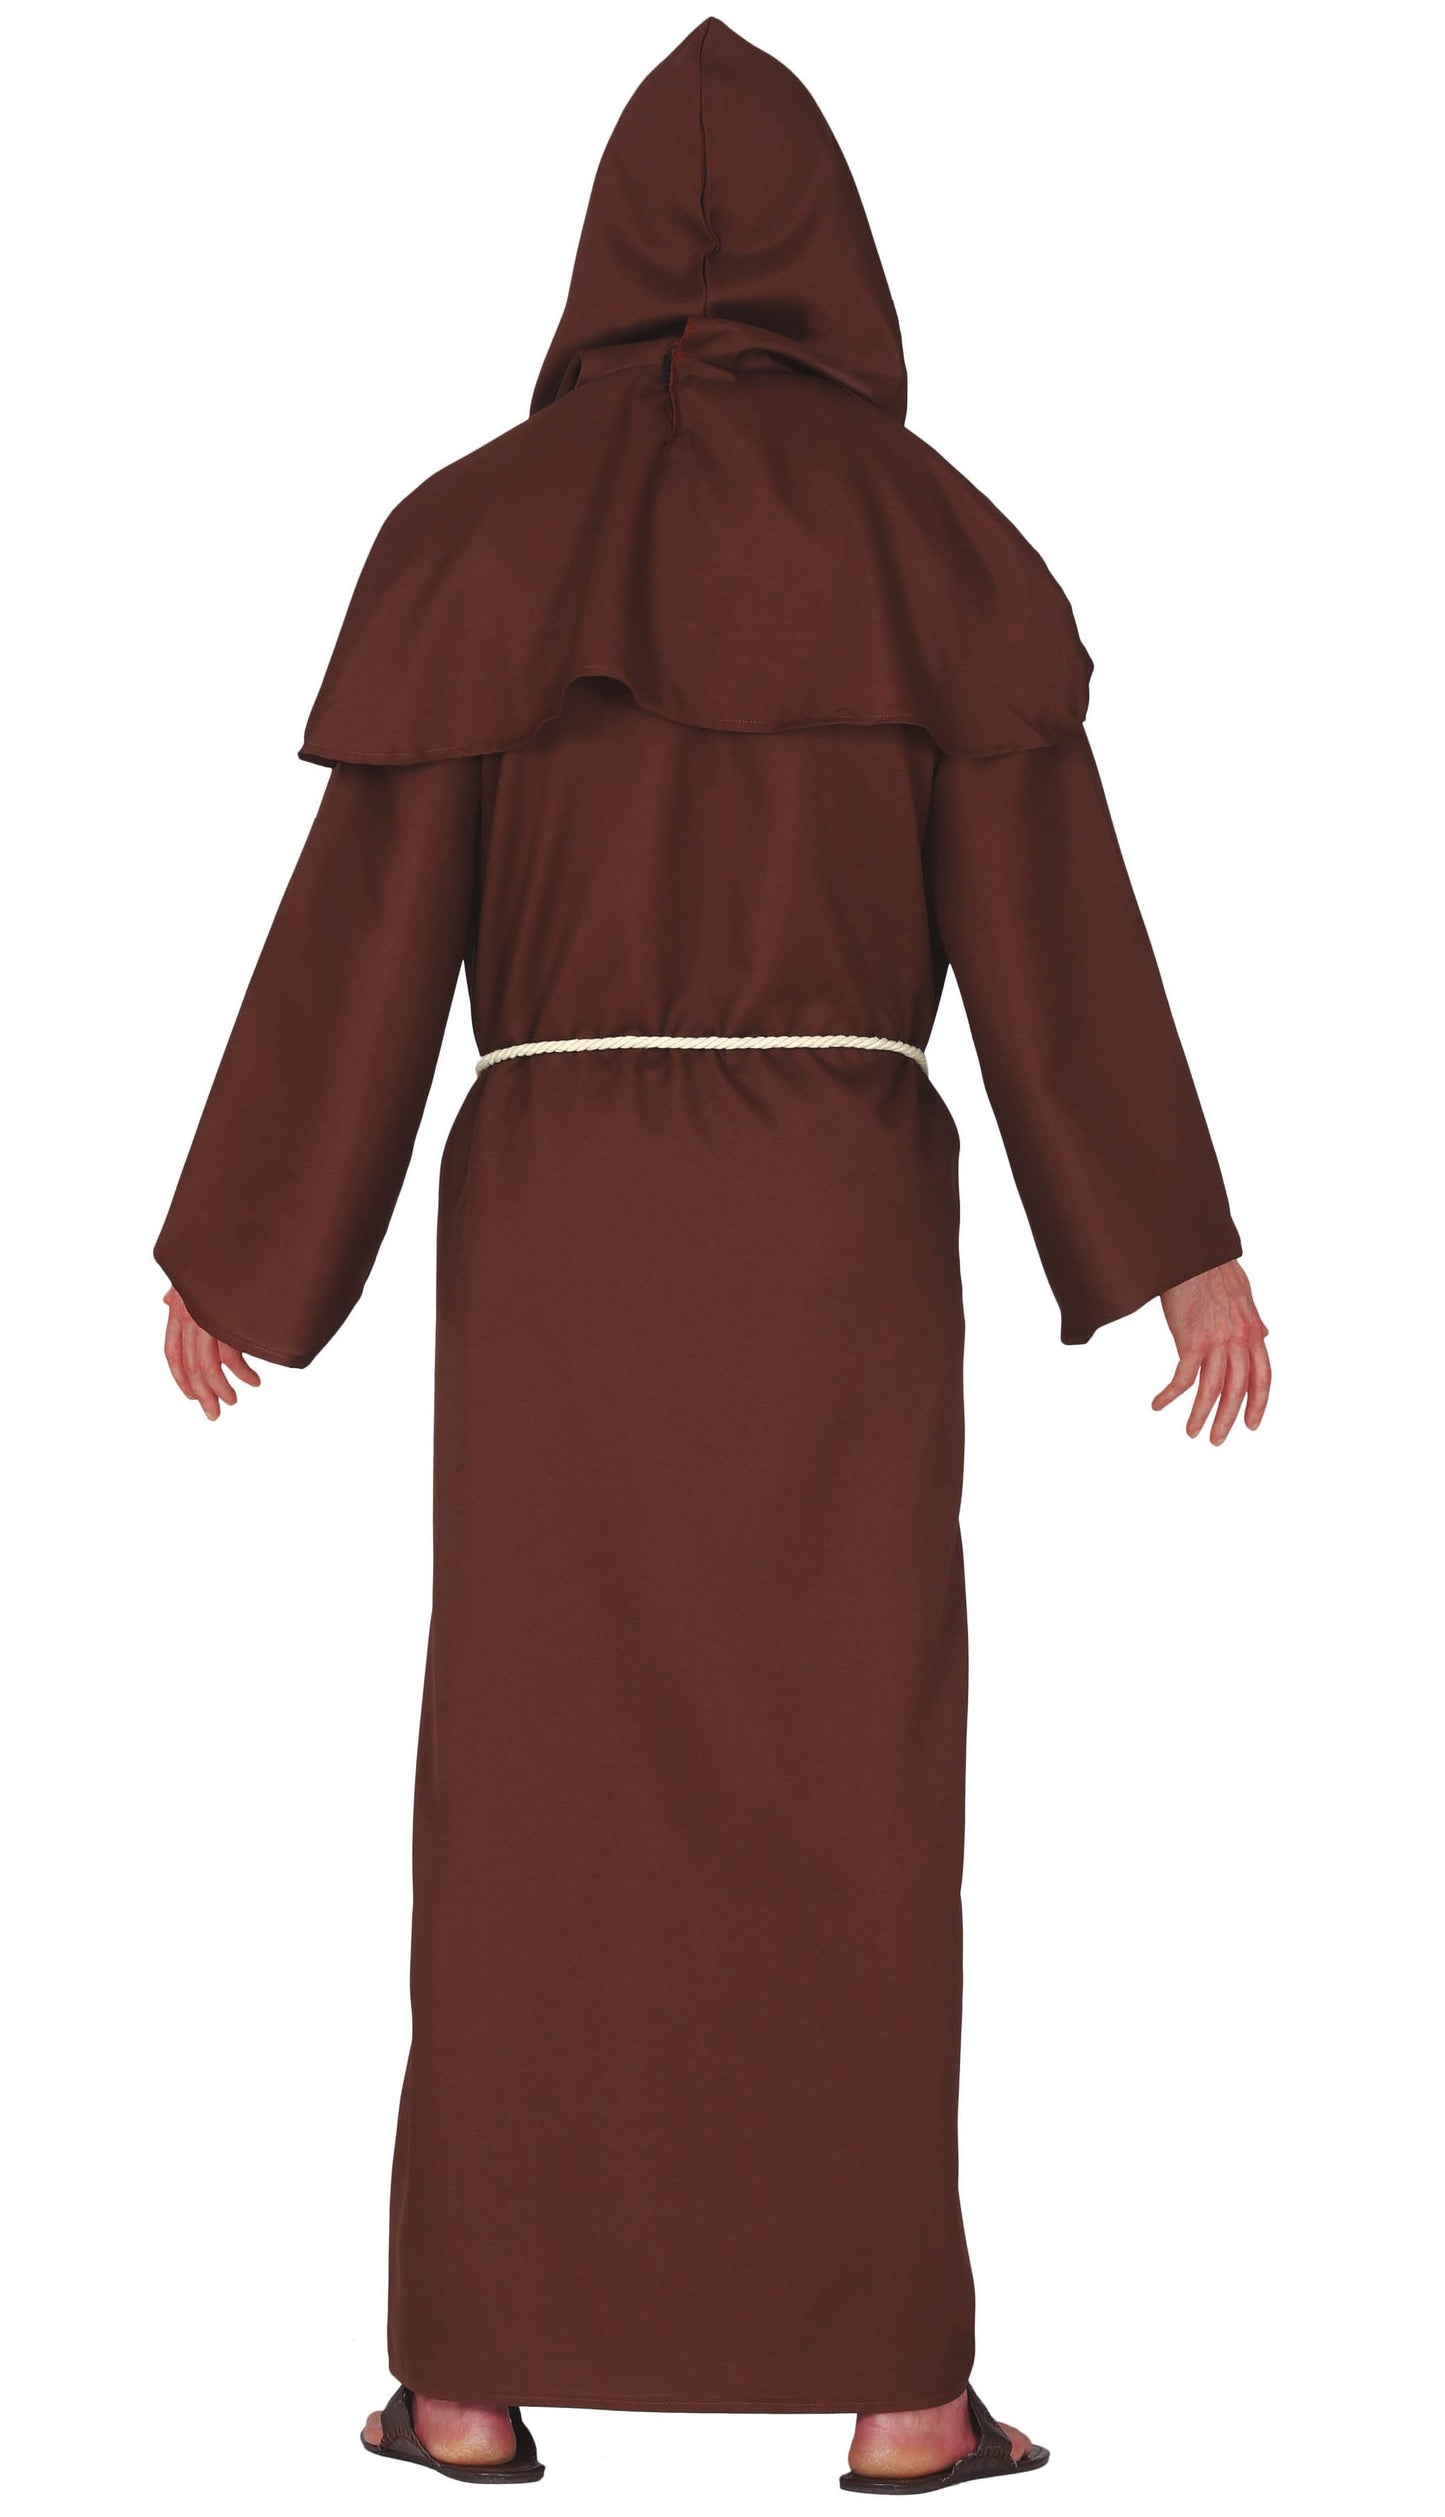 Monk Cut Costume